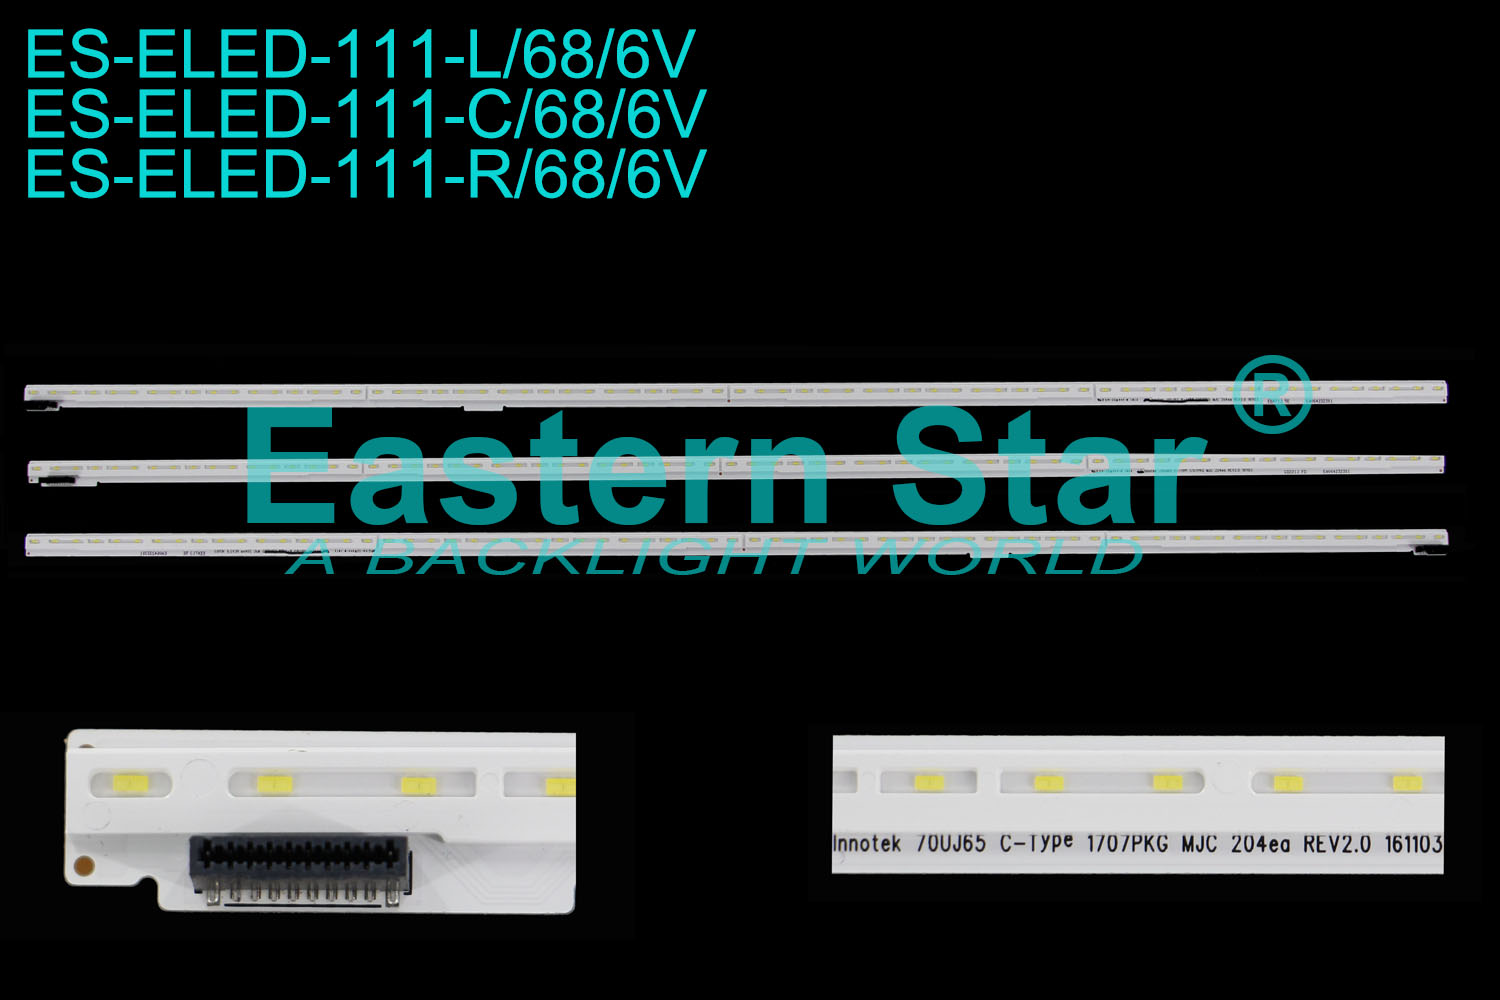 ES-ELED-111 ELED/EDGE TV backlight use for LG 70'' 68LEDs LG Innoteck R/L-Type 1707PKG MJC 204ea REV2.0 161103 LED STRIPS(3)ORIGINAL STOCK